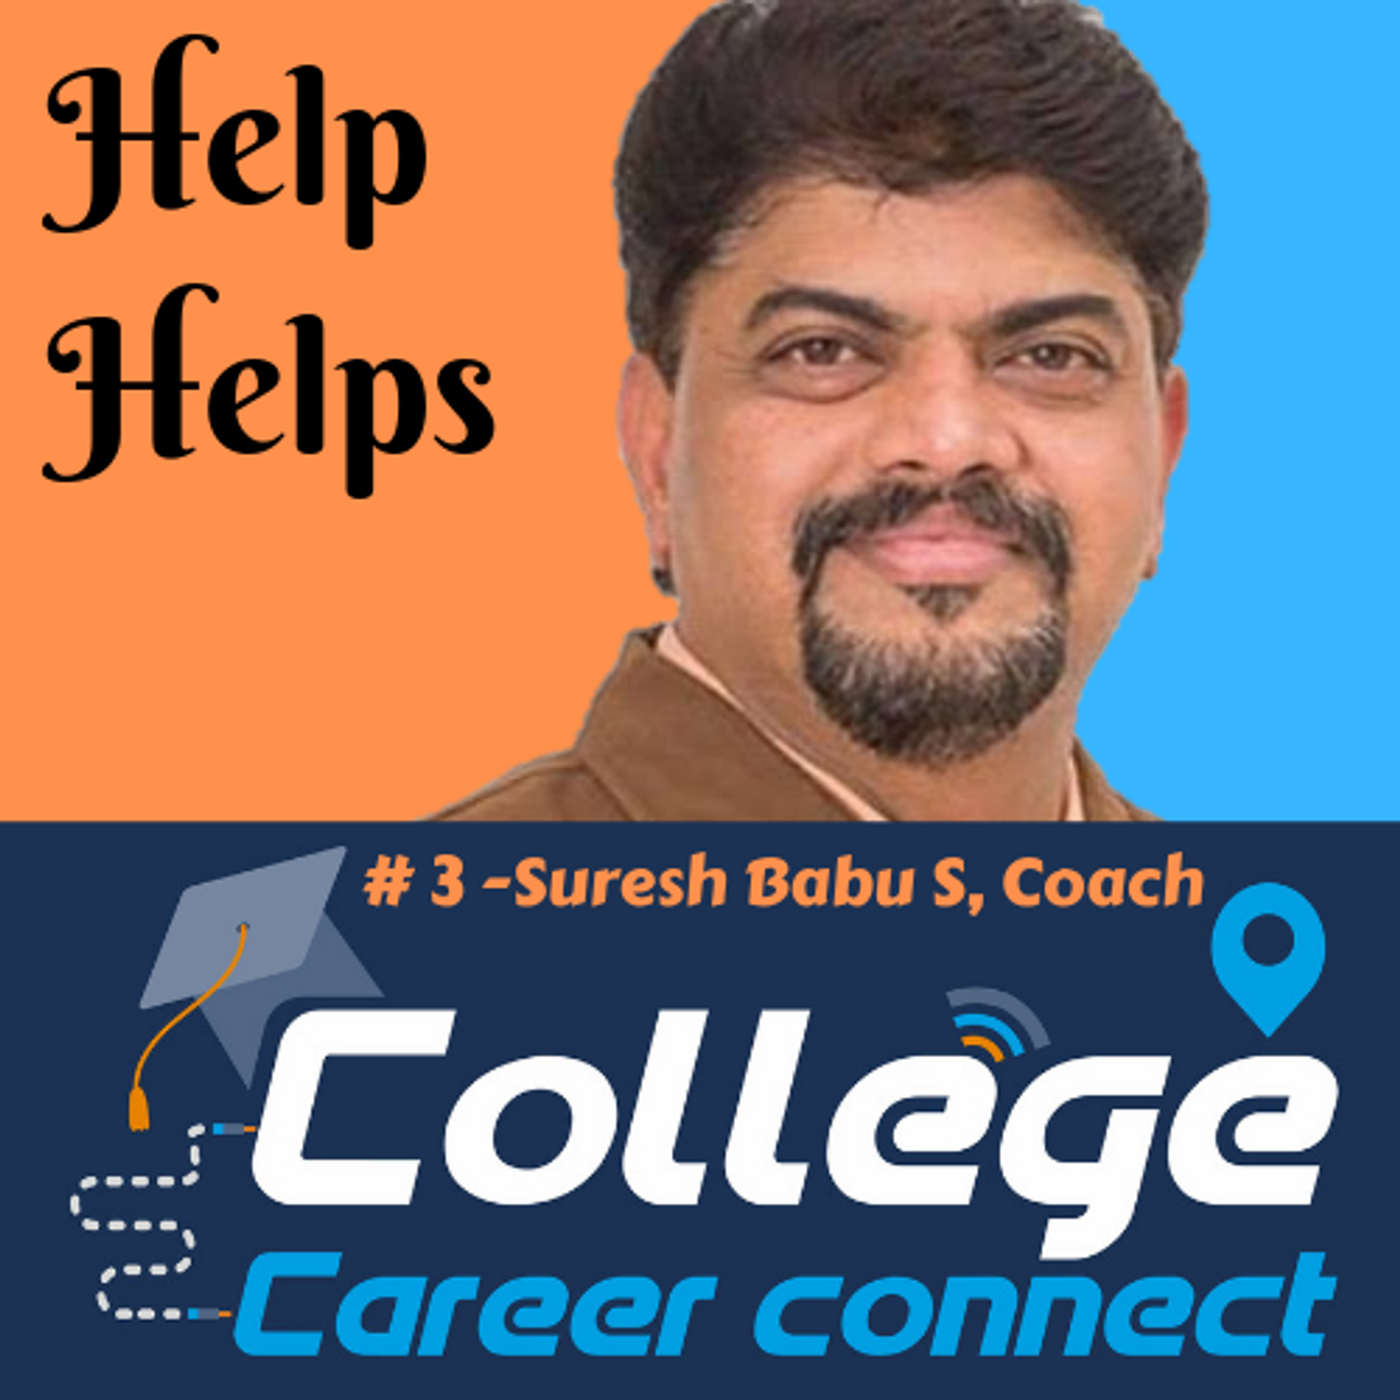 #3. Help Helps - Suresh Babu S, Coach